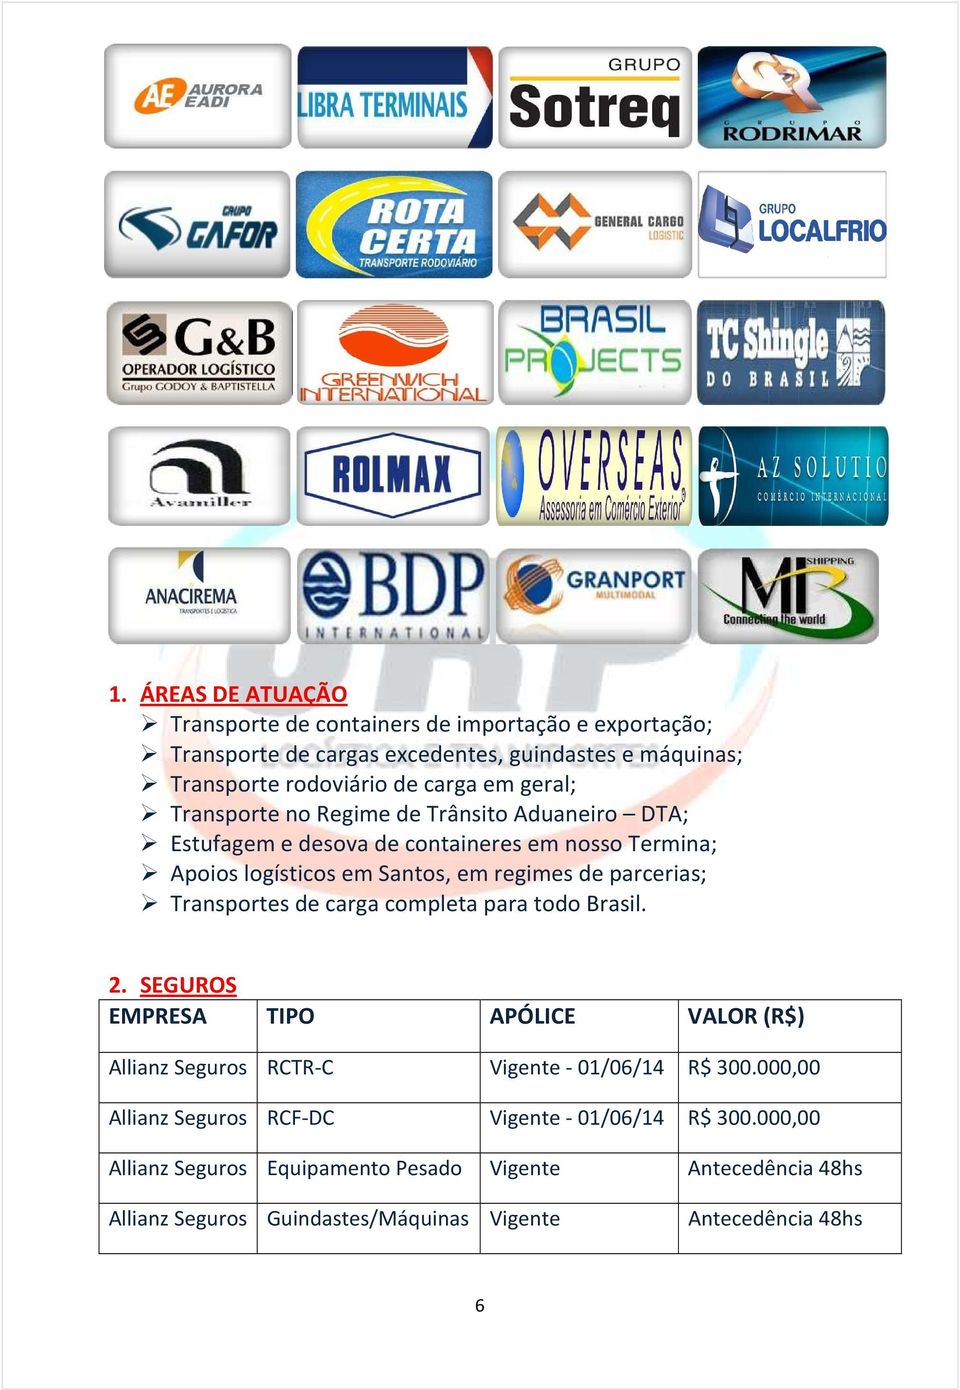 Transportes de carga completa para todo Brasil. 2. SEGUROS EMPRESA TIPO APÓLICE VALOR (R$) Allianz Seguros RCTR-C Vigente - 01/06/14 R$ 300.